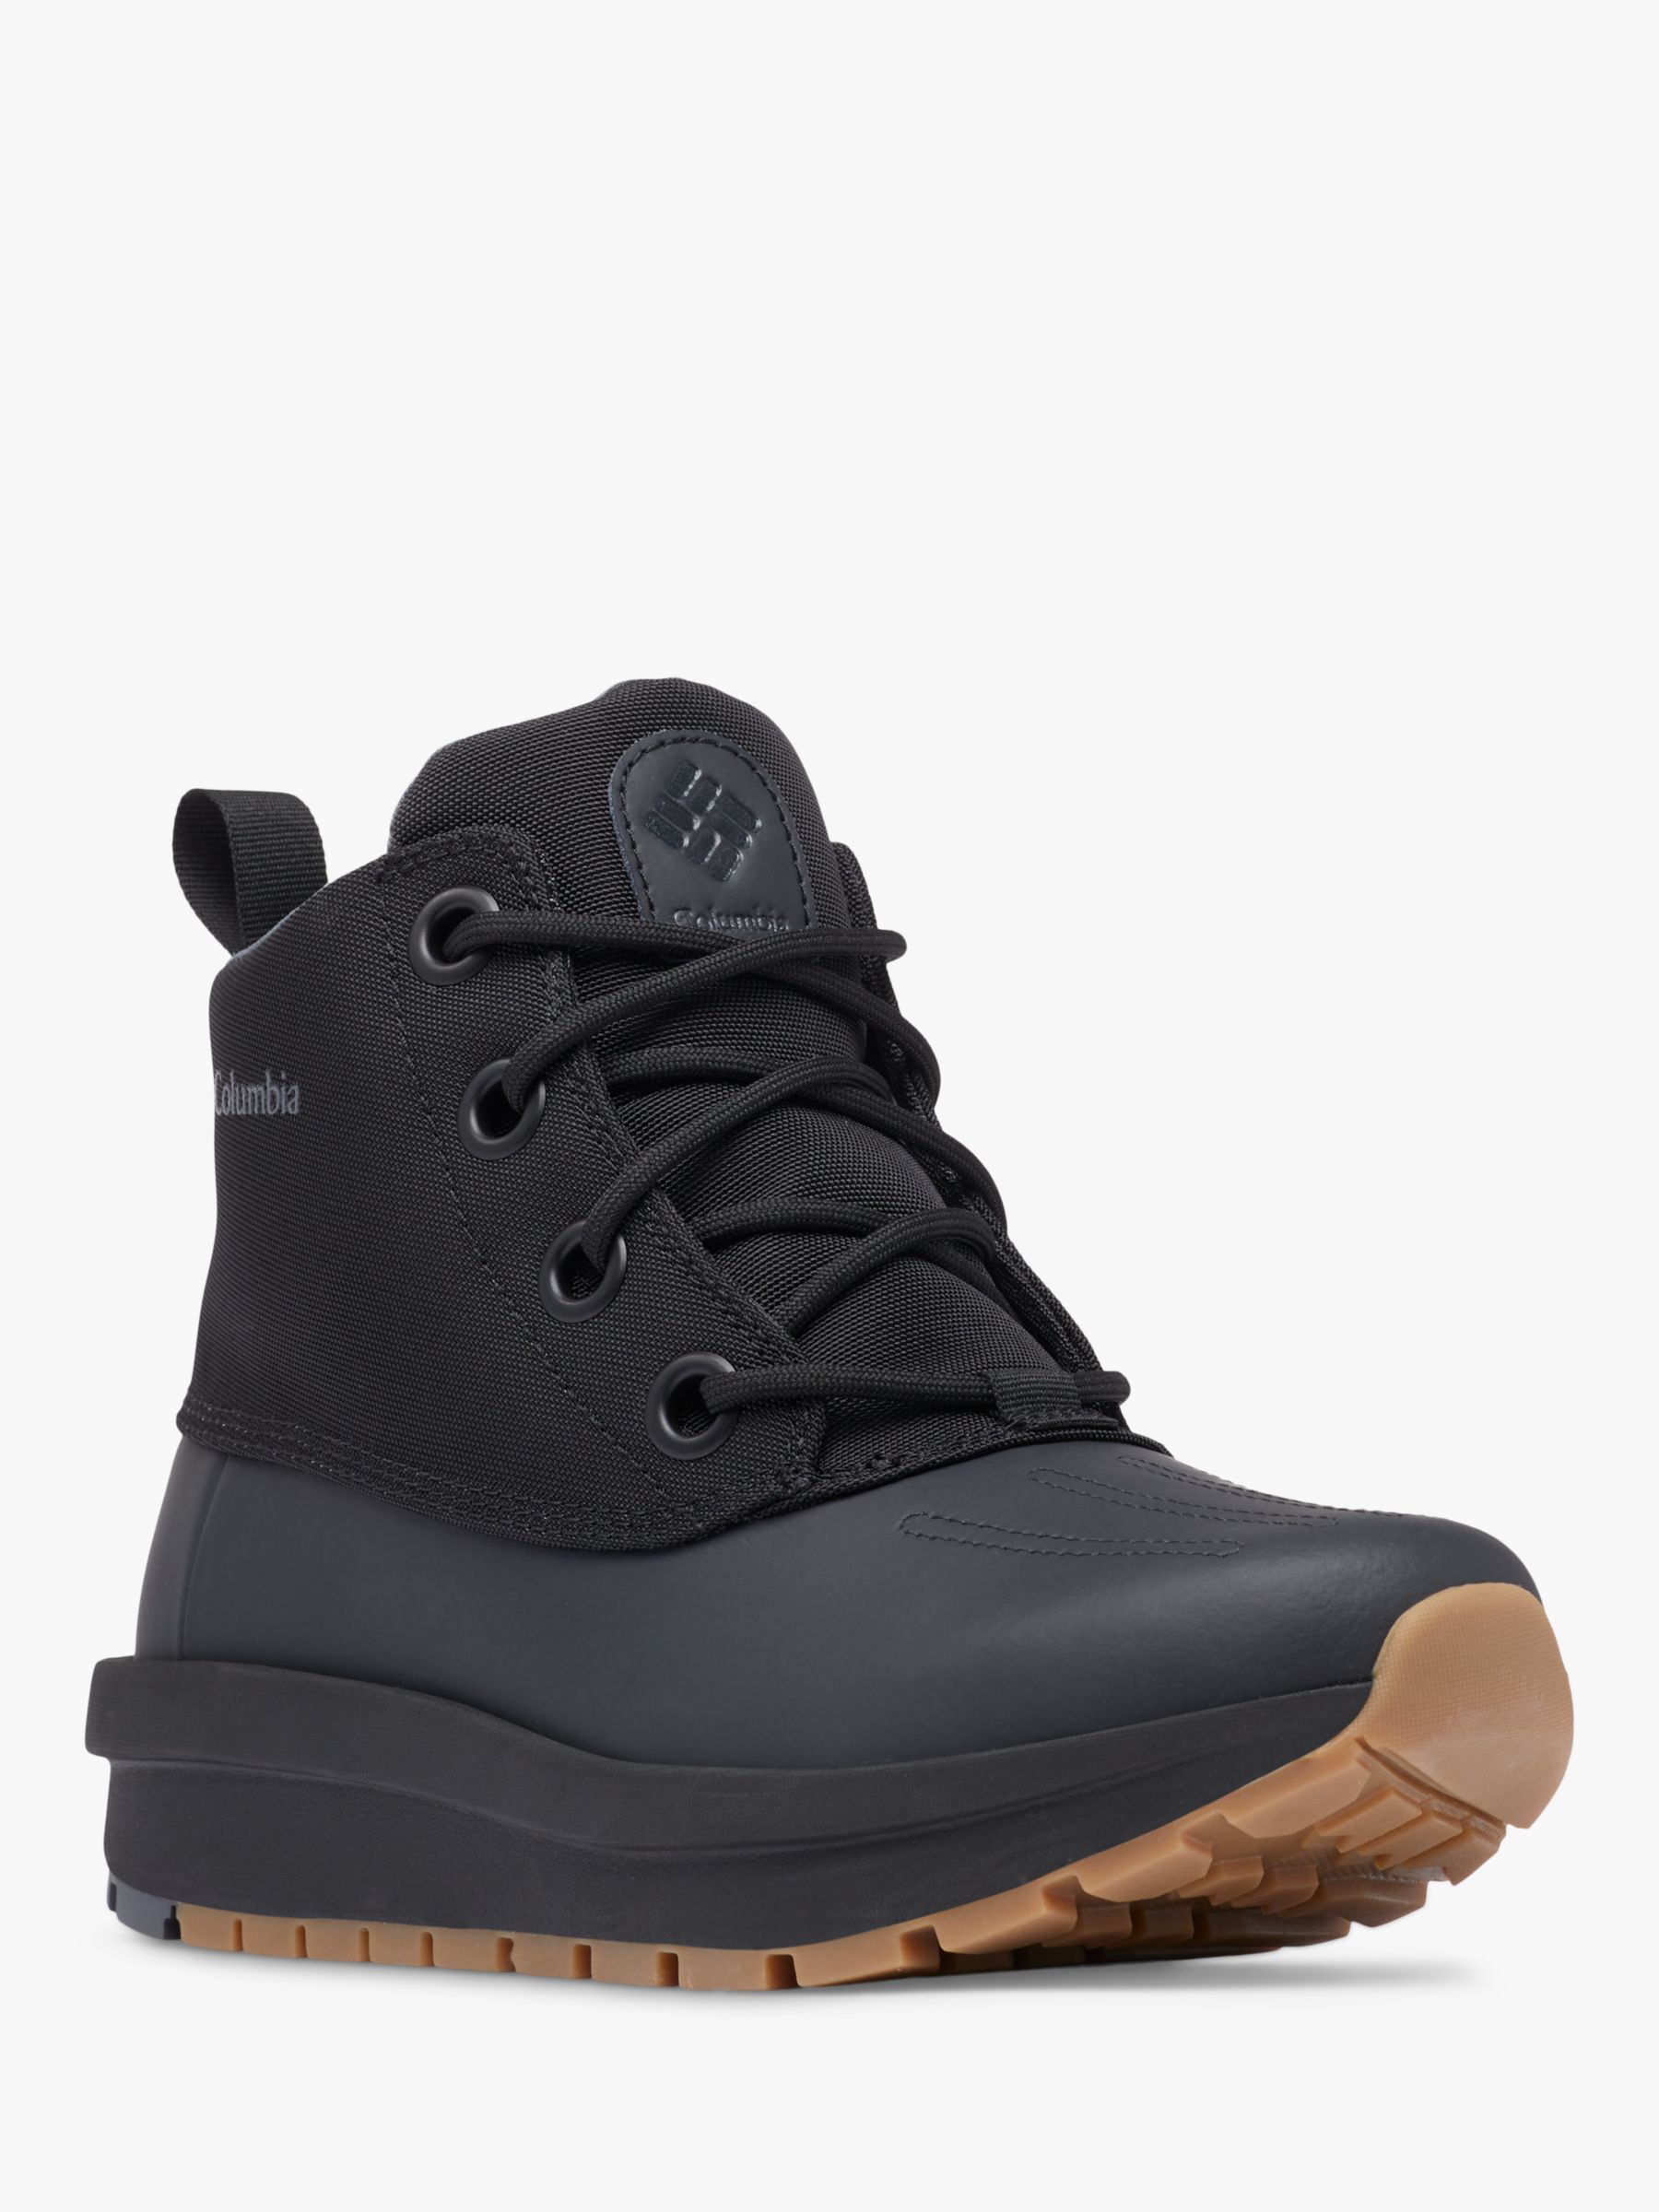 Columbia Moritza Shield Shorty Winter Boots, Black, 4